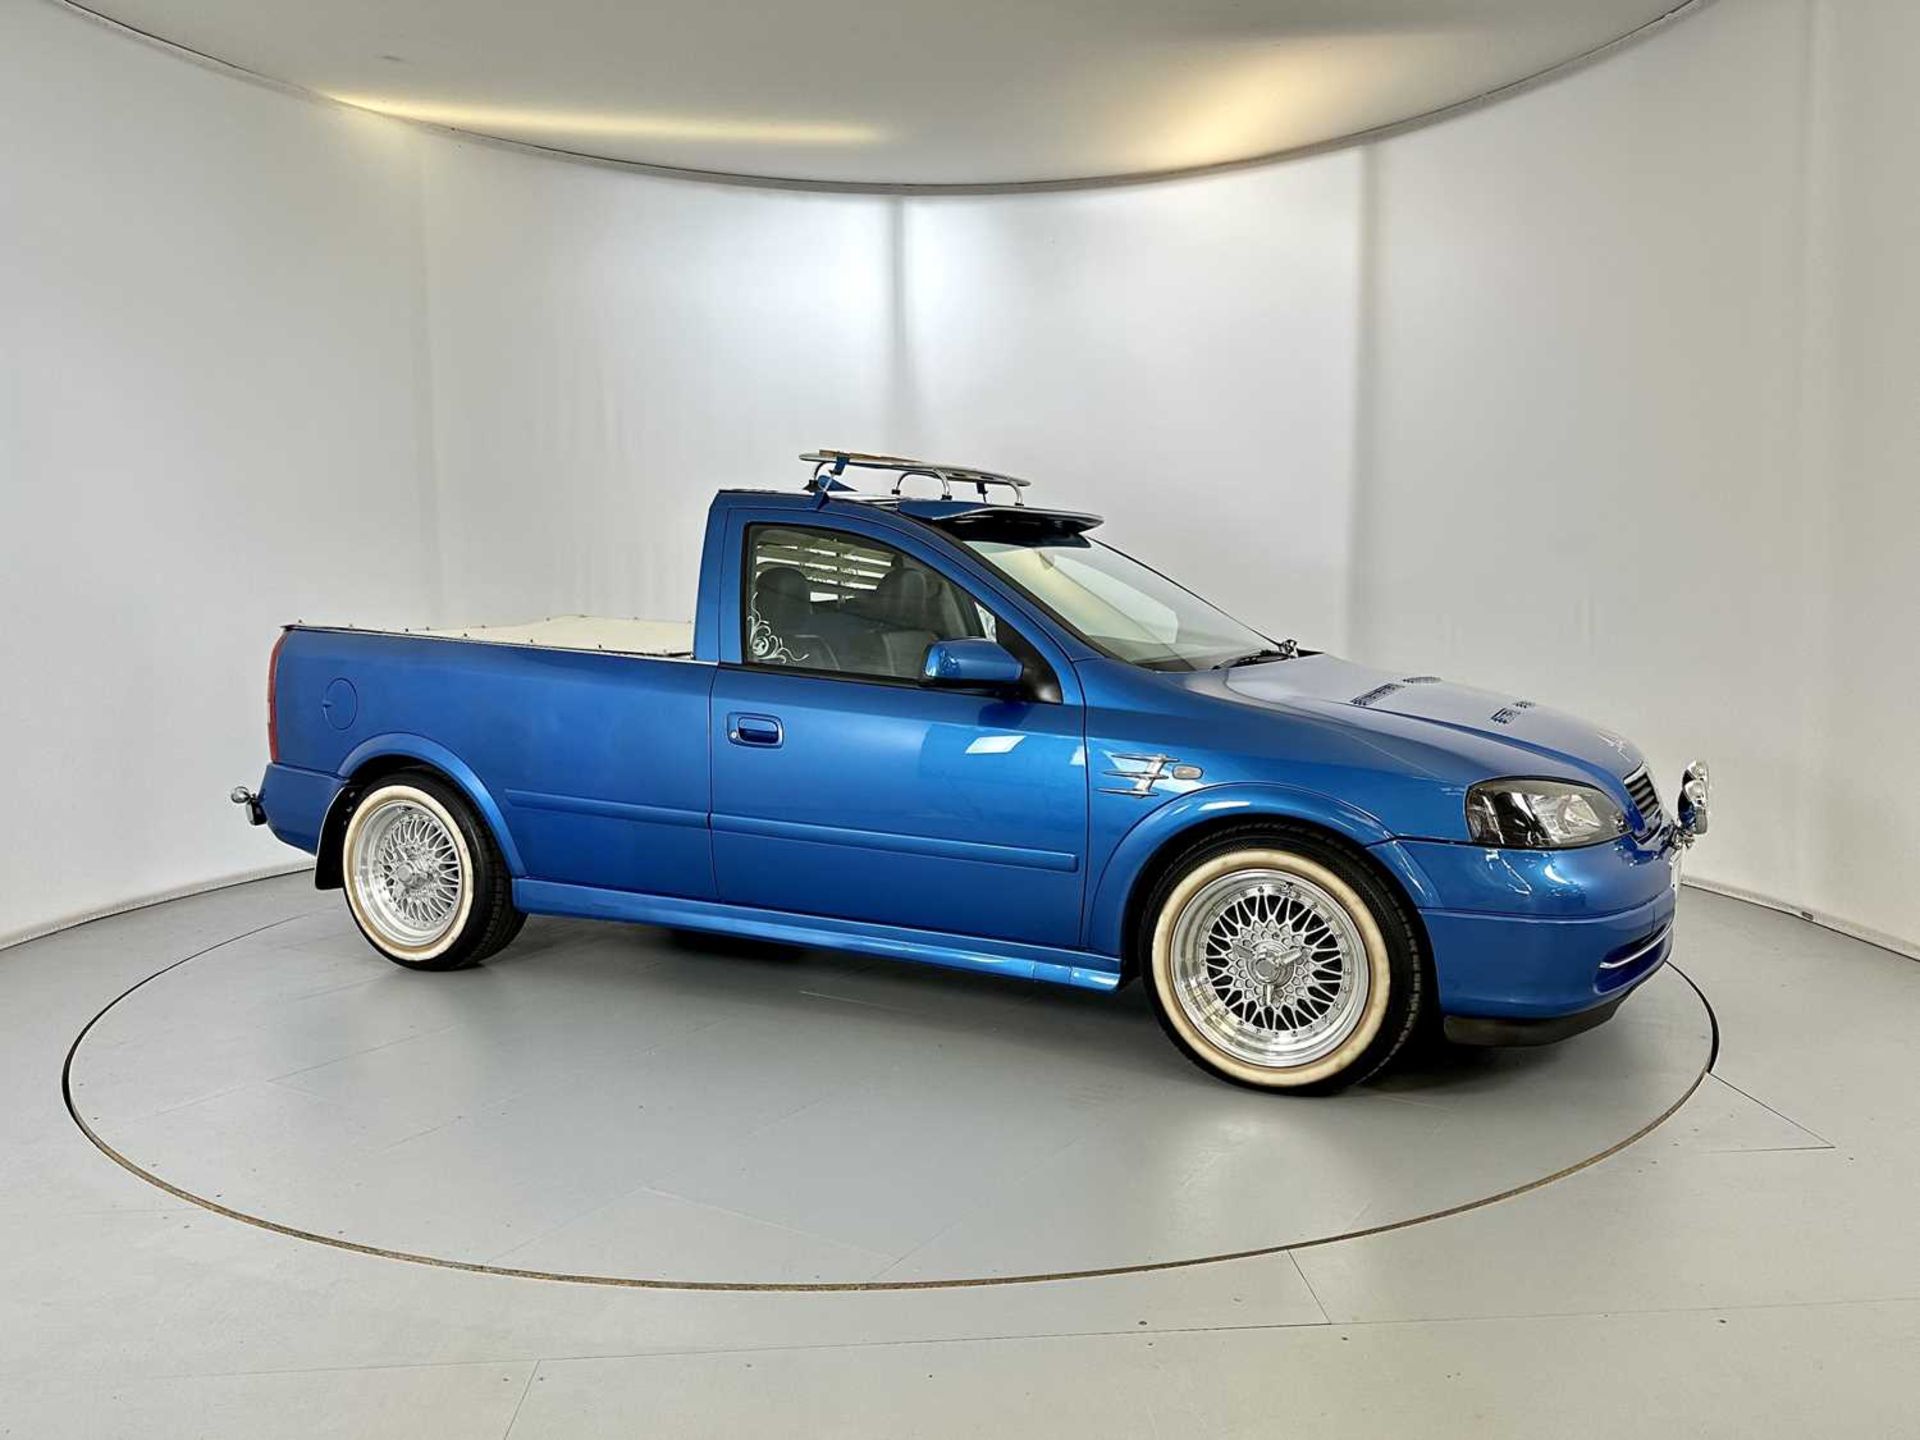 2000 Vauxhall Astra Pickup - Image 12 of 30